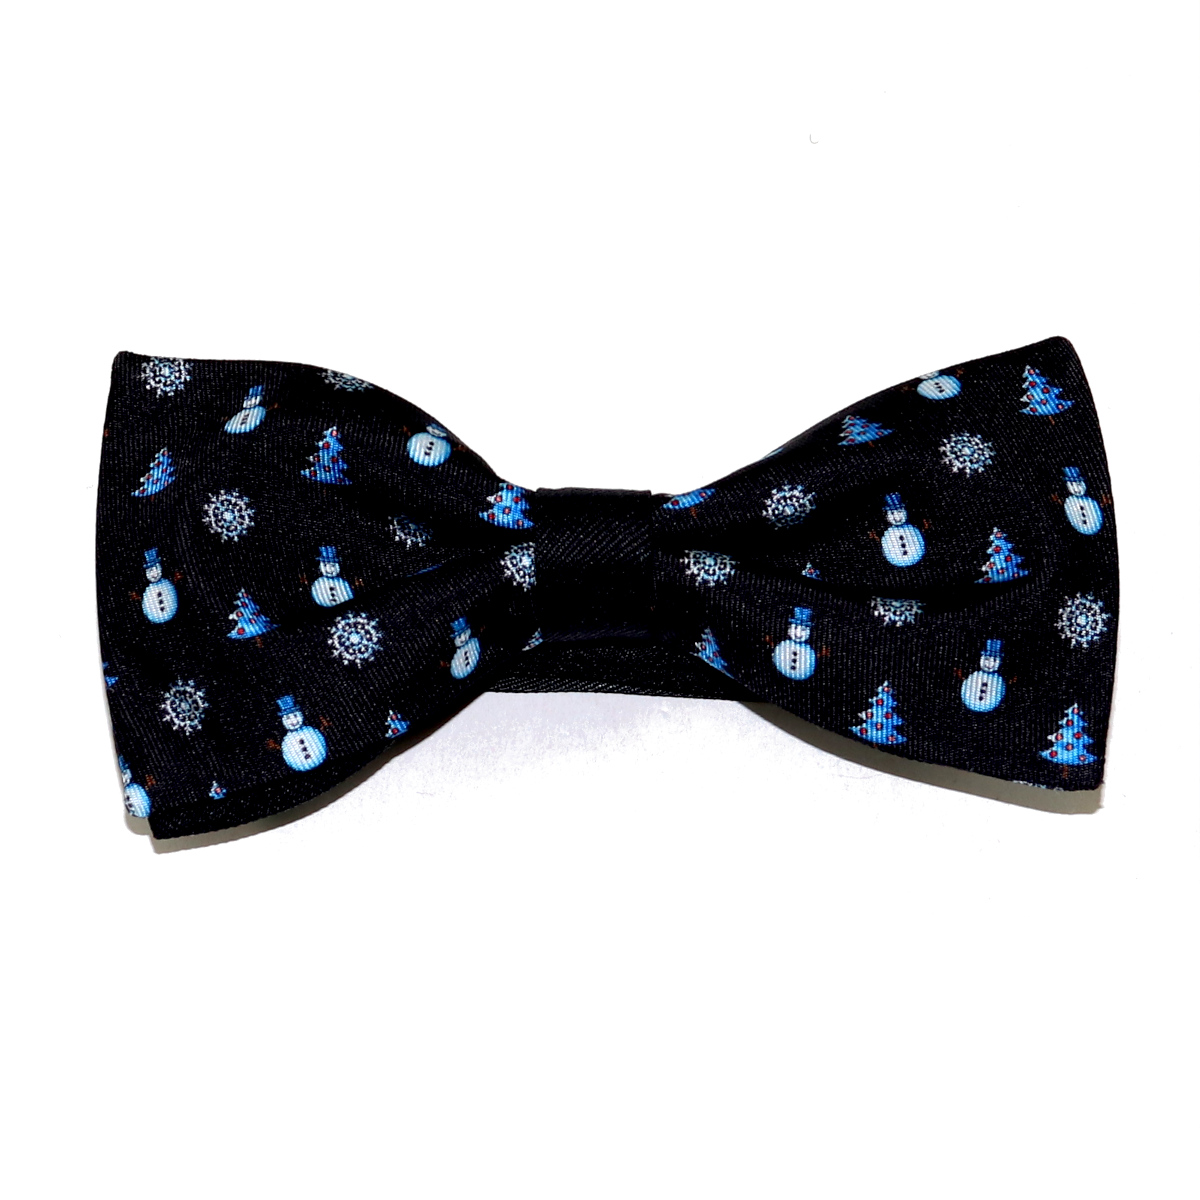 Sartorial blak twill silk bow tie with light blue Christmas